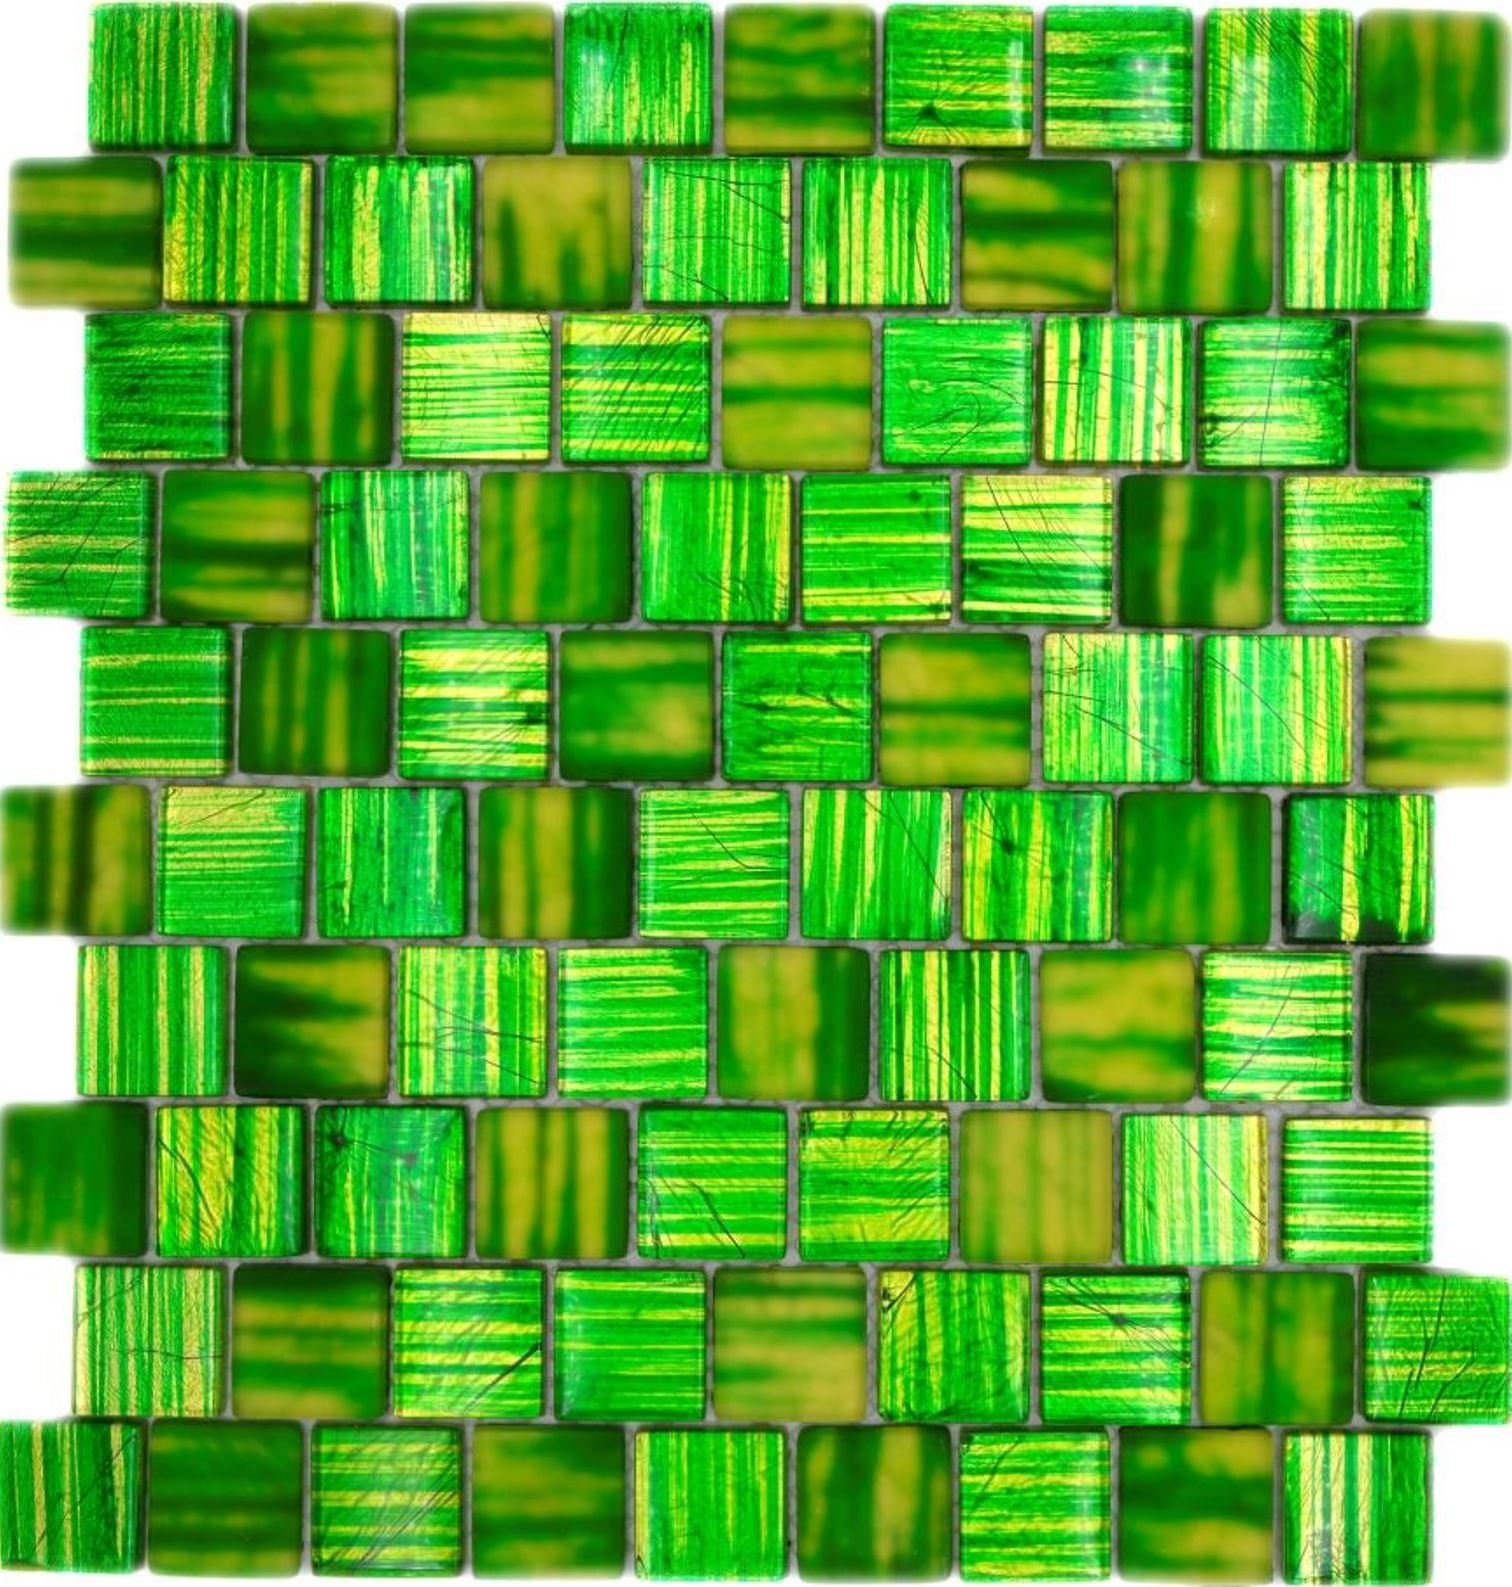 Mosani Mosaikfliesen Mosaik Fliese Transluzent Glasmosaik Crystal Milchglas grün klar matt